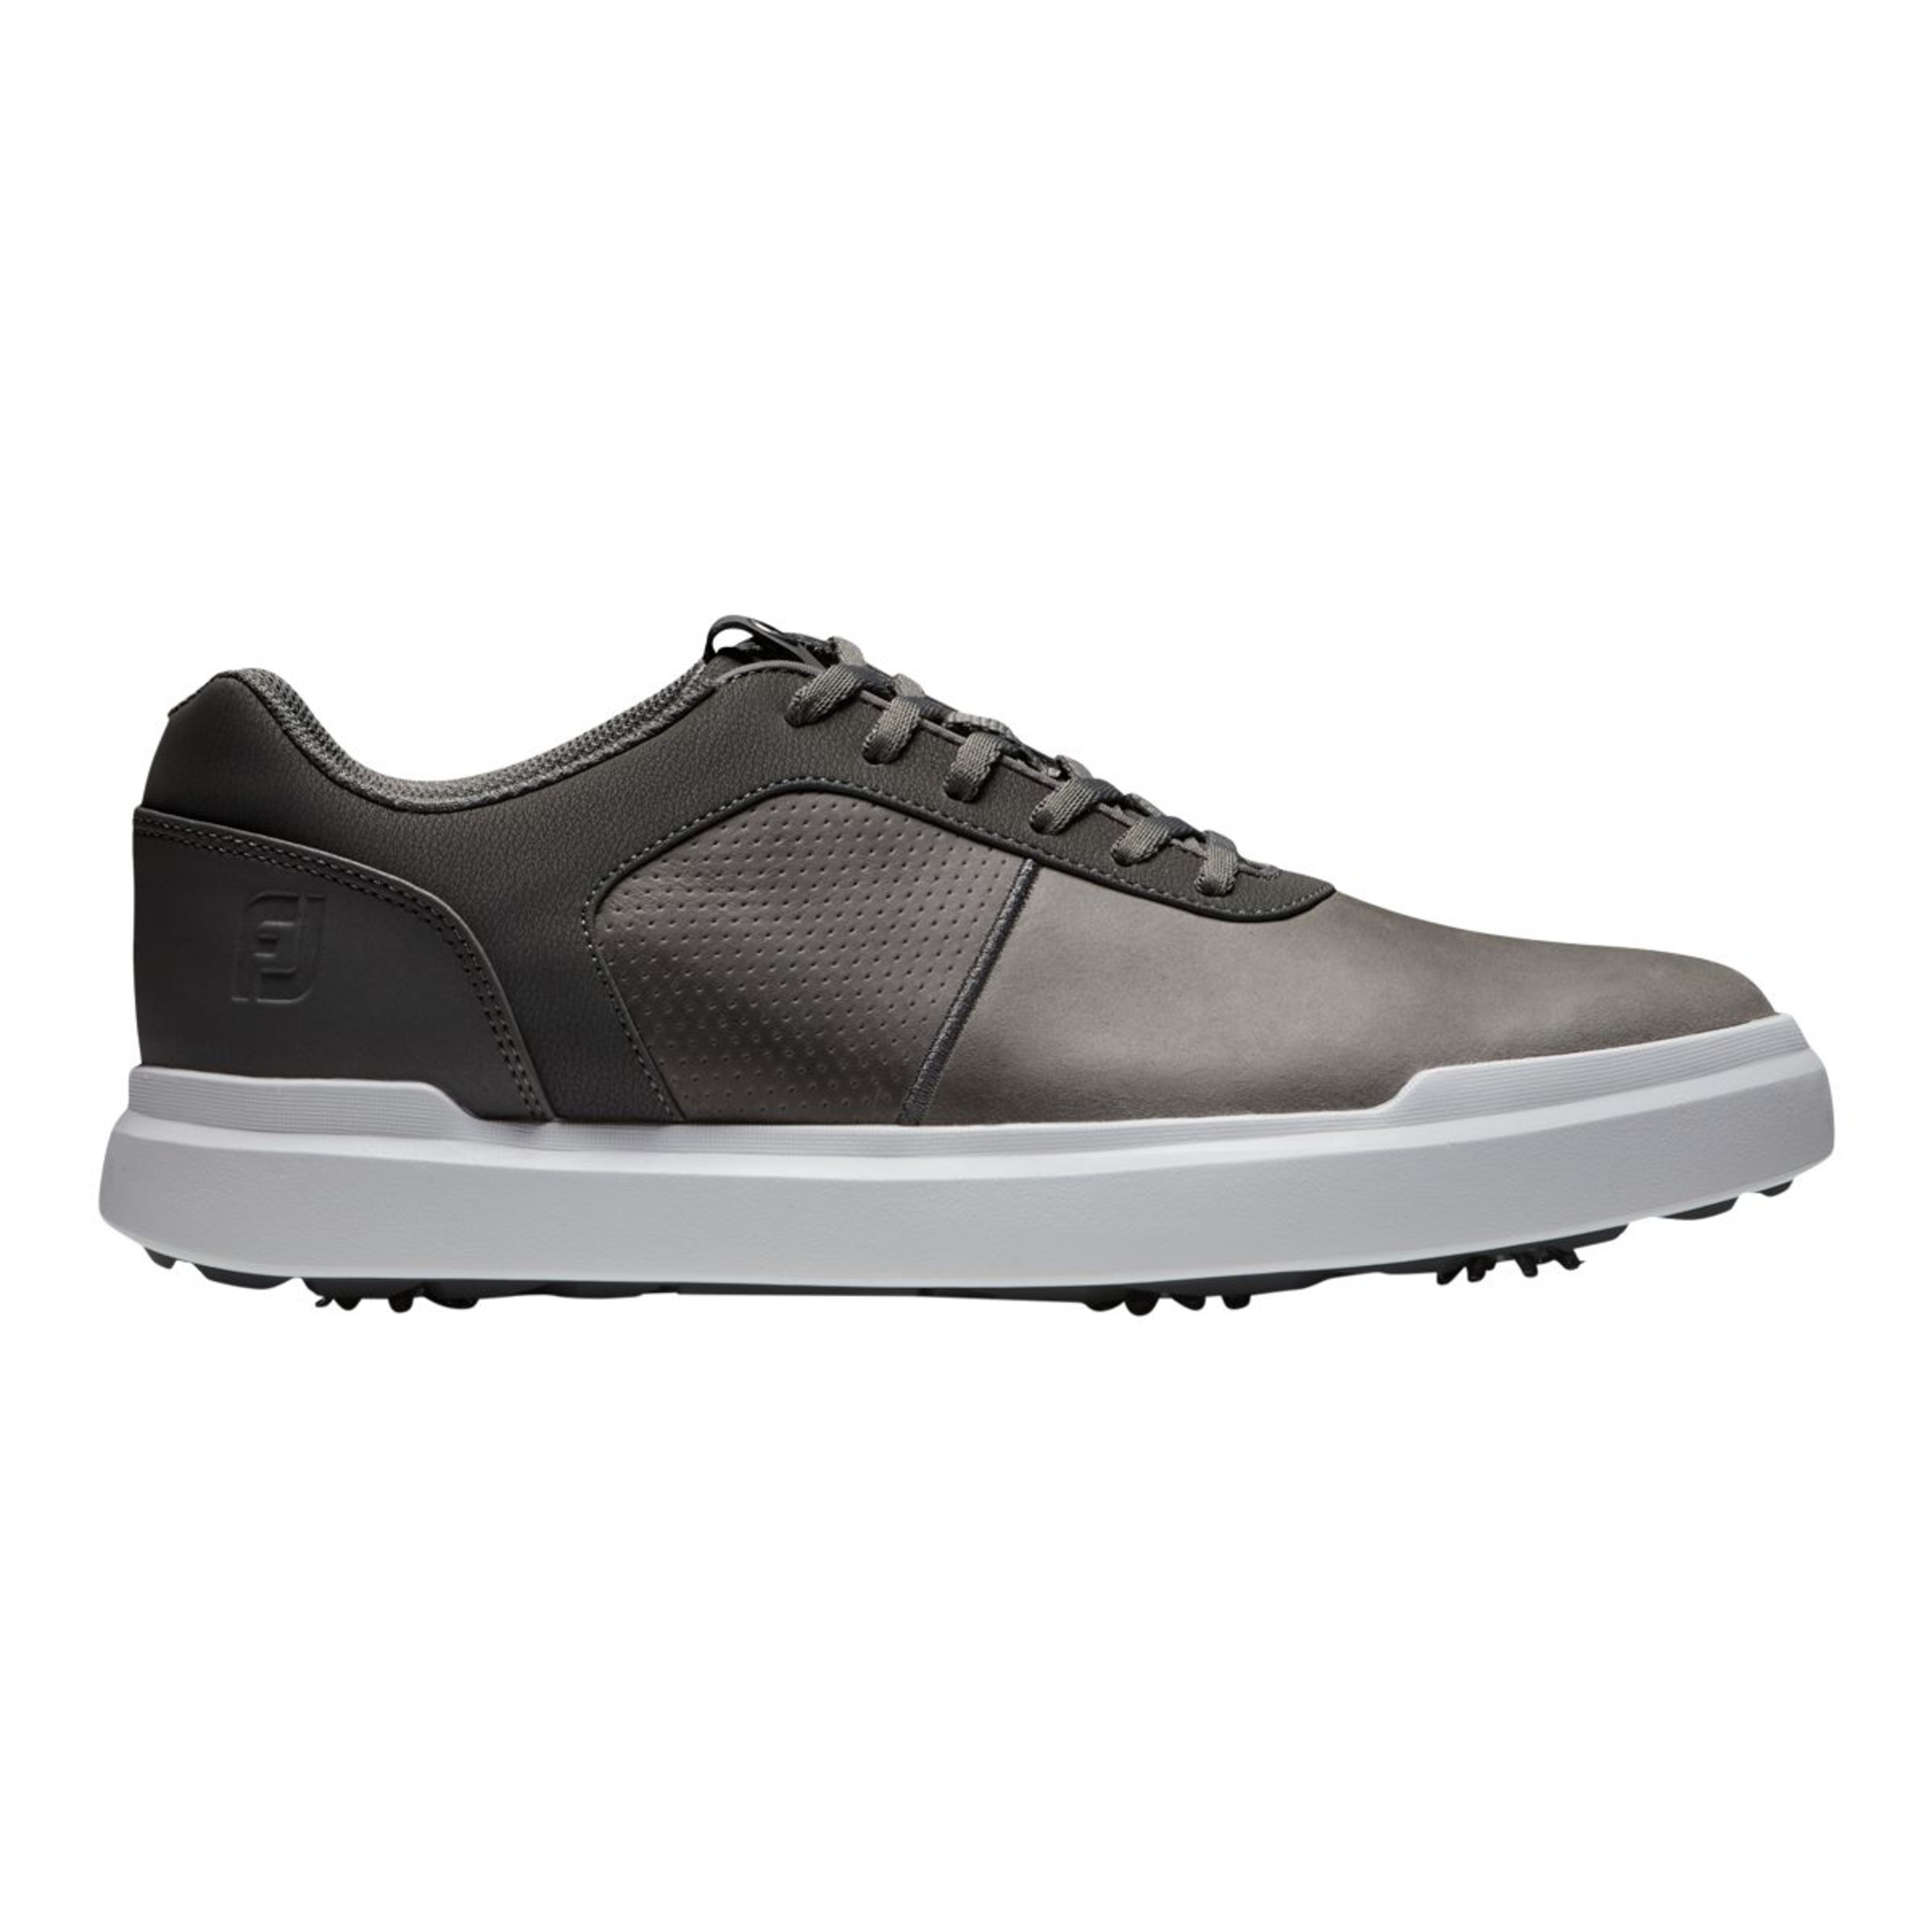 Footjoy Men's Contour Series Golf Shoes, Spiked, Waterproof | SportChek